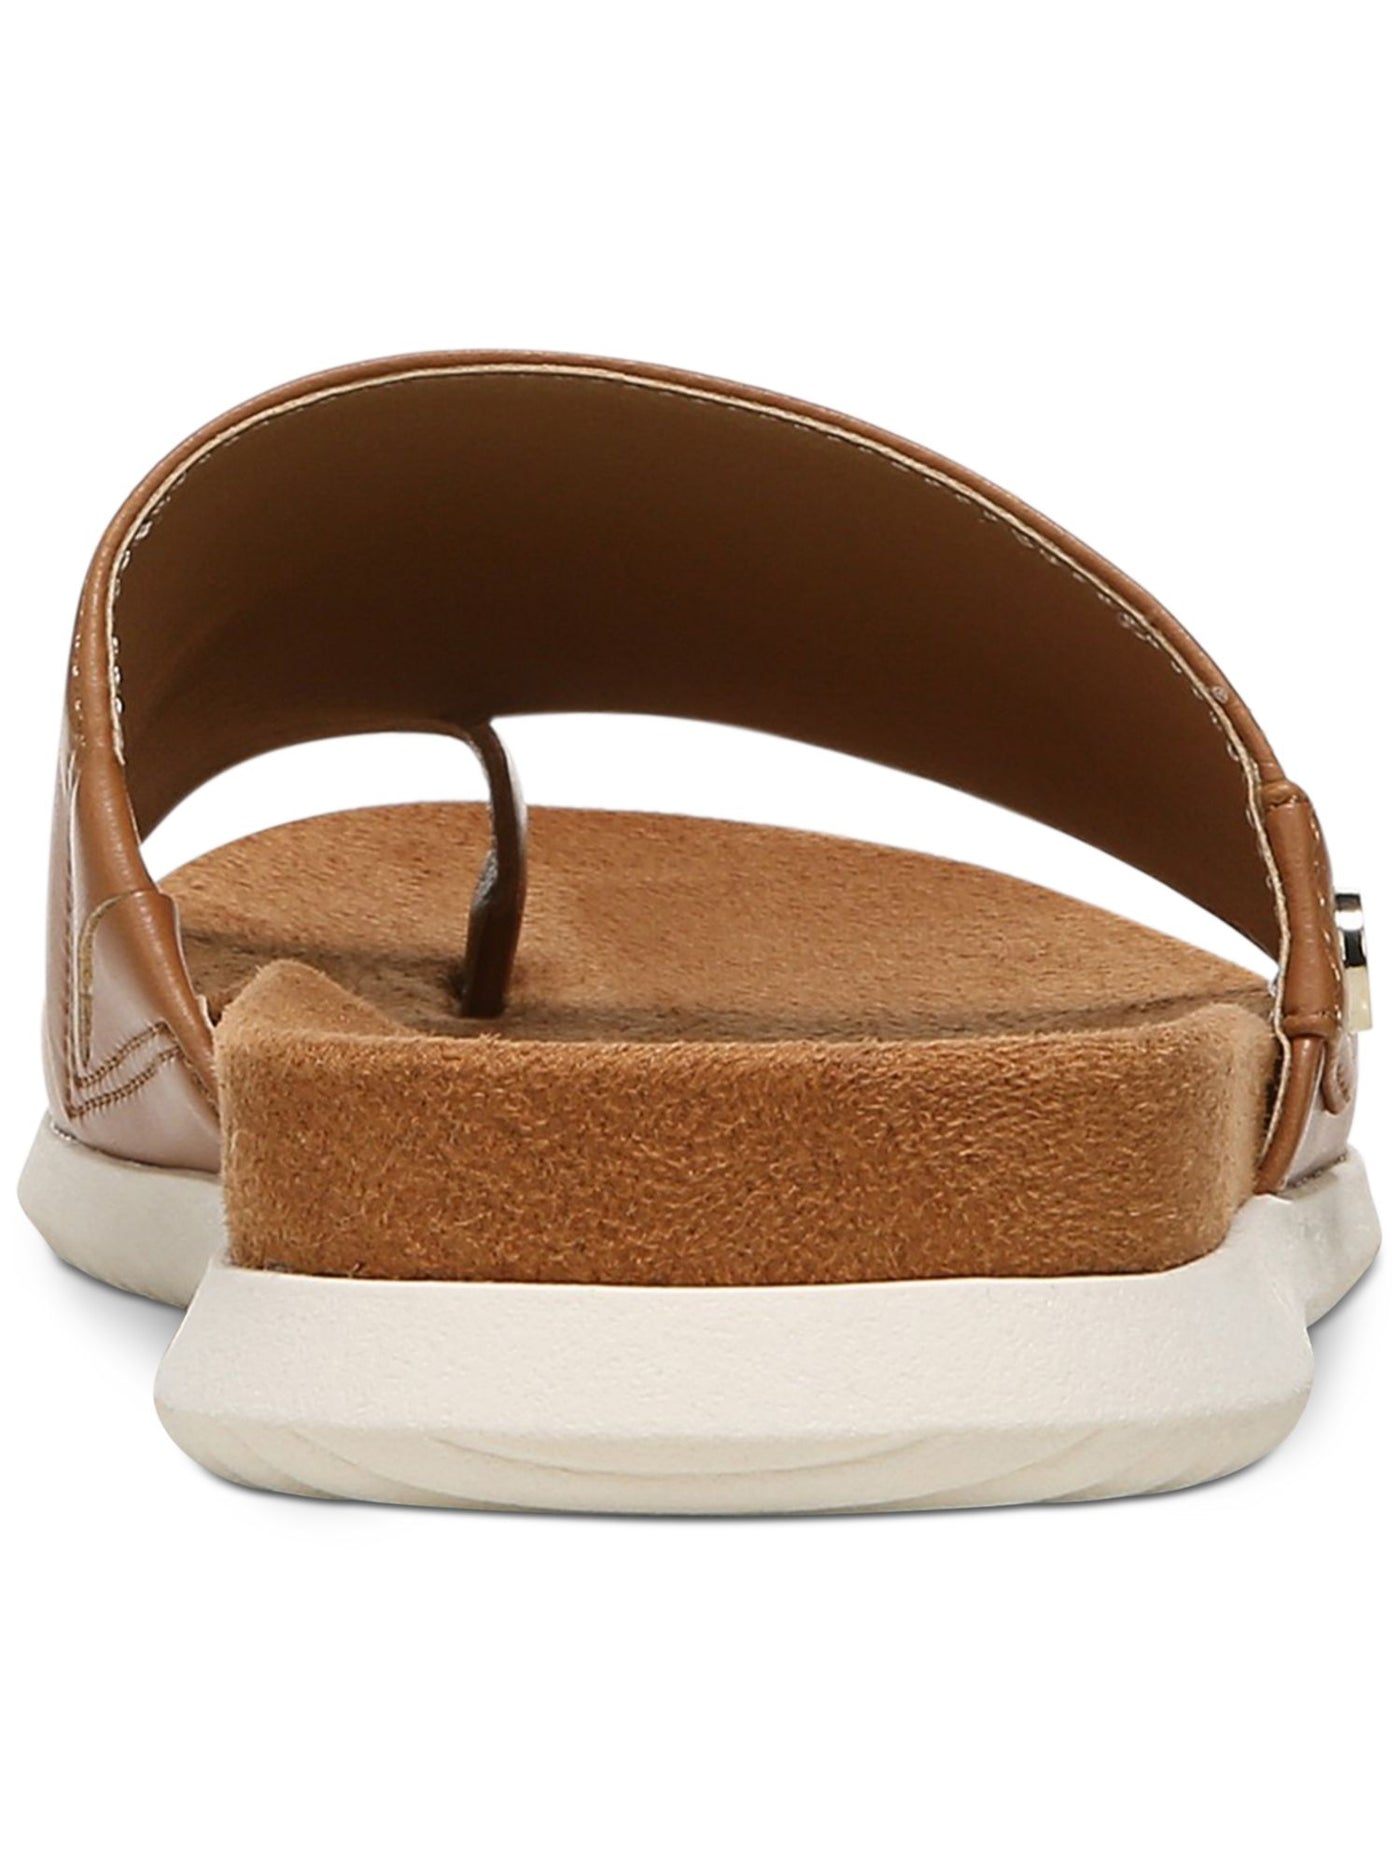 GIANI BERNINI Womens Brown Textured Goring Logo Cushioned Comfort Cristeena Round Toe Wedge Slip On Sandals Shoes 10 M